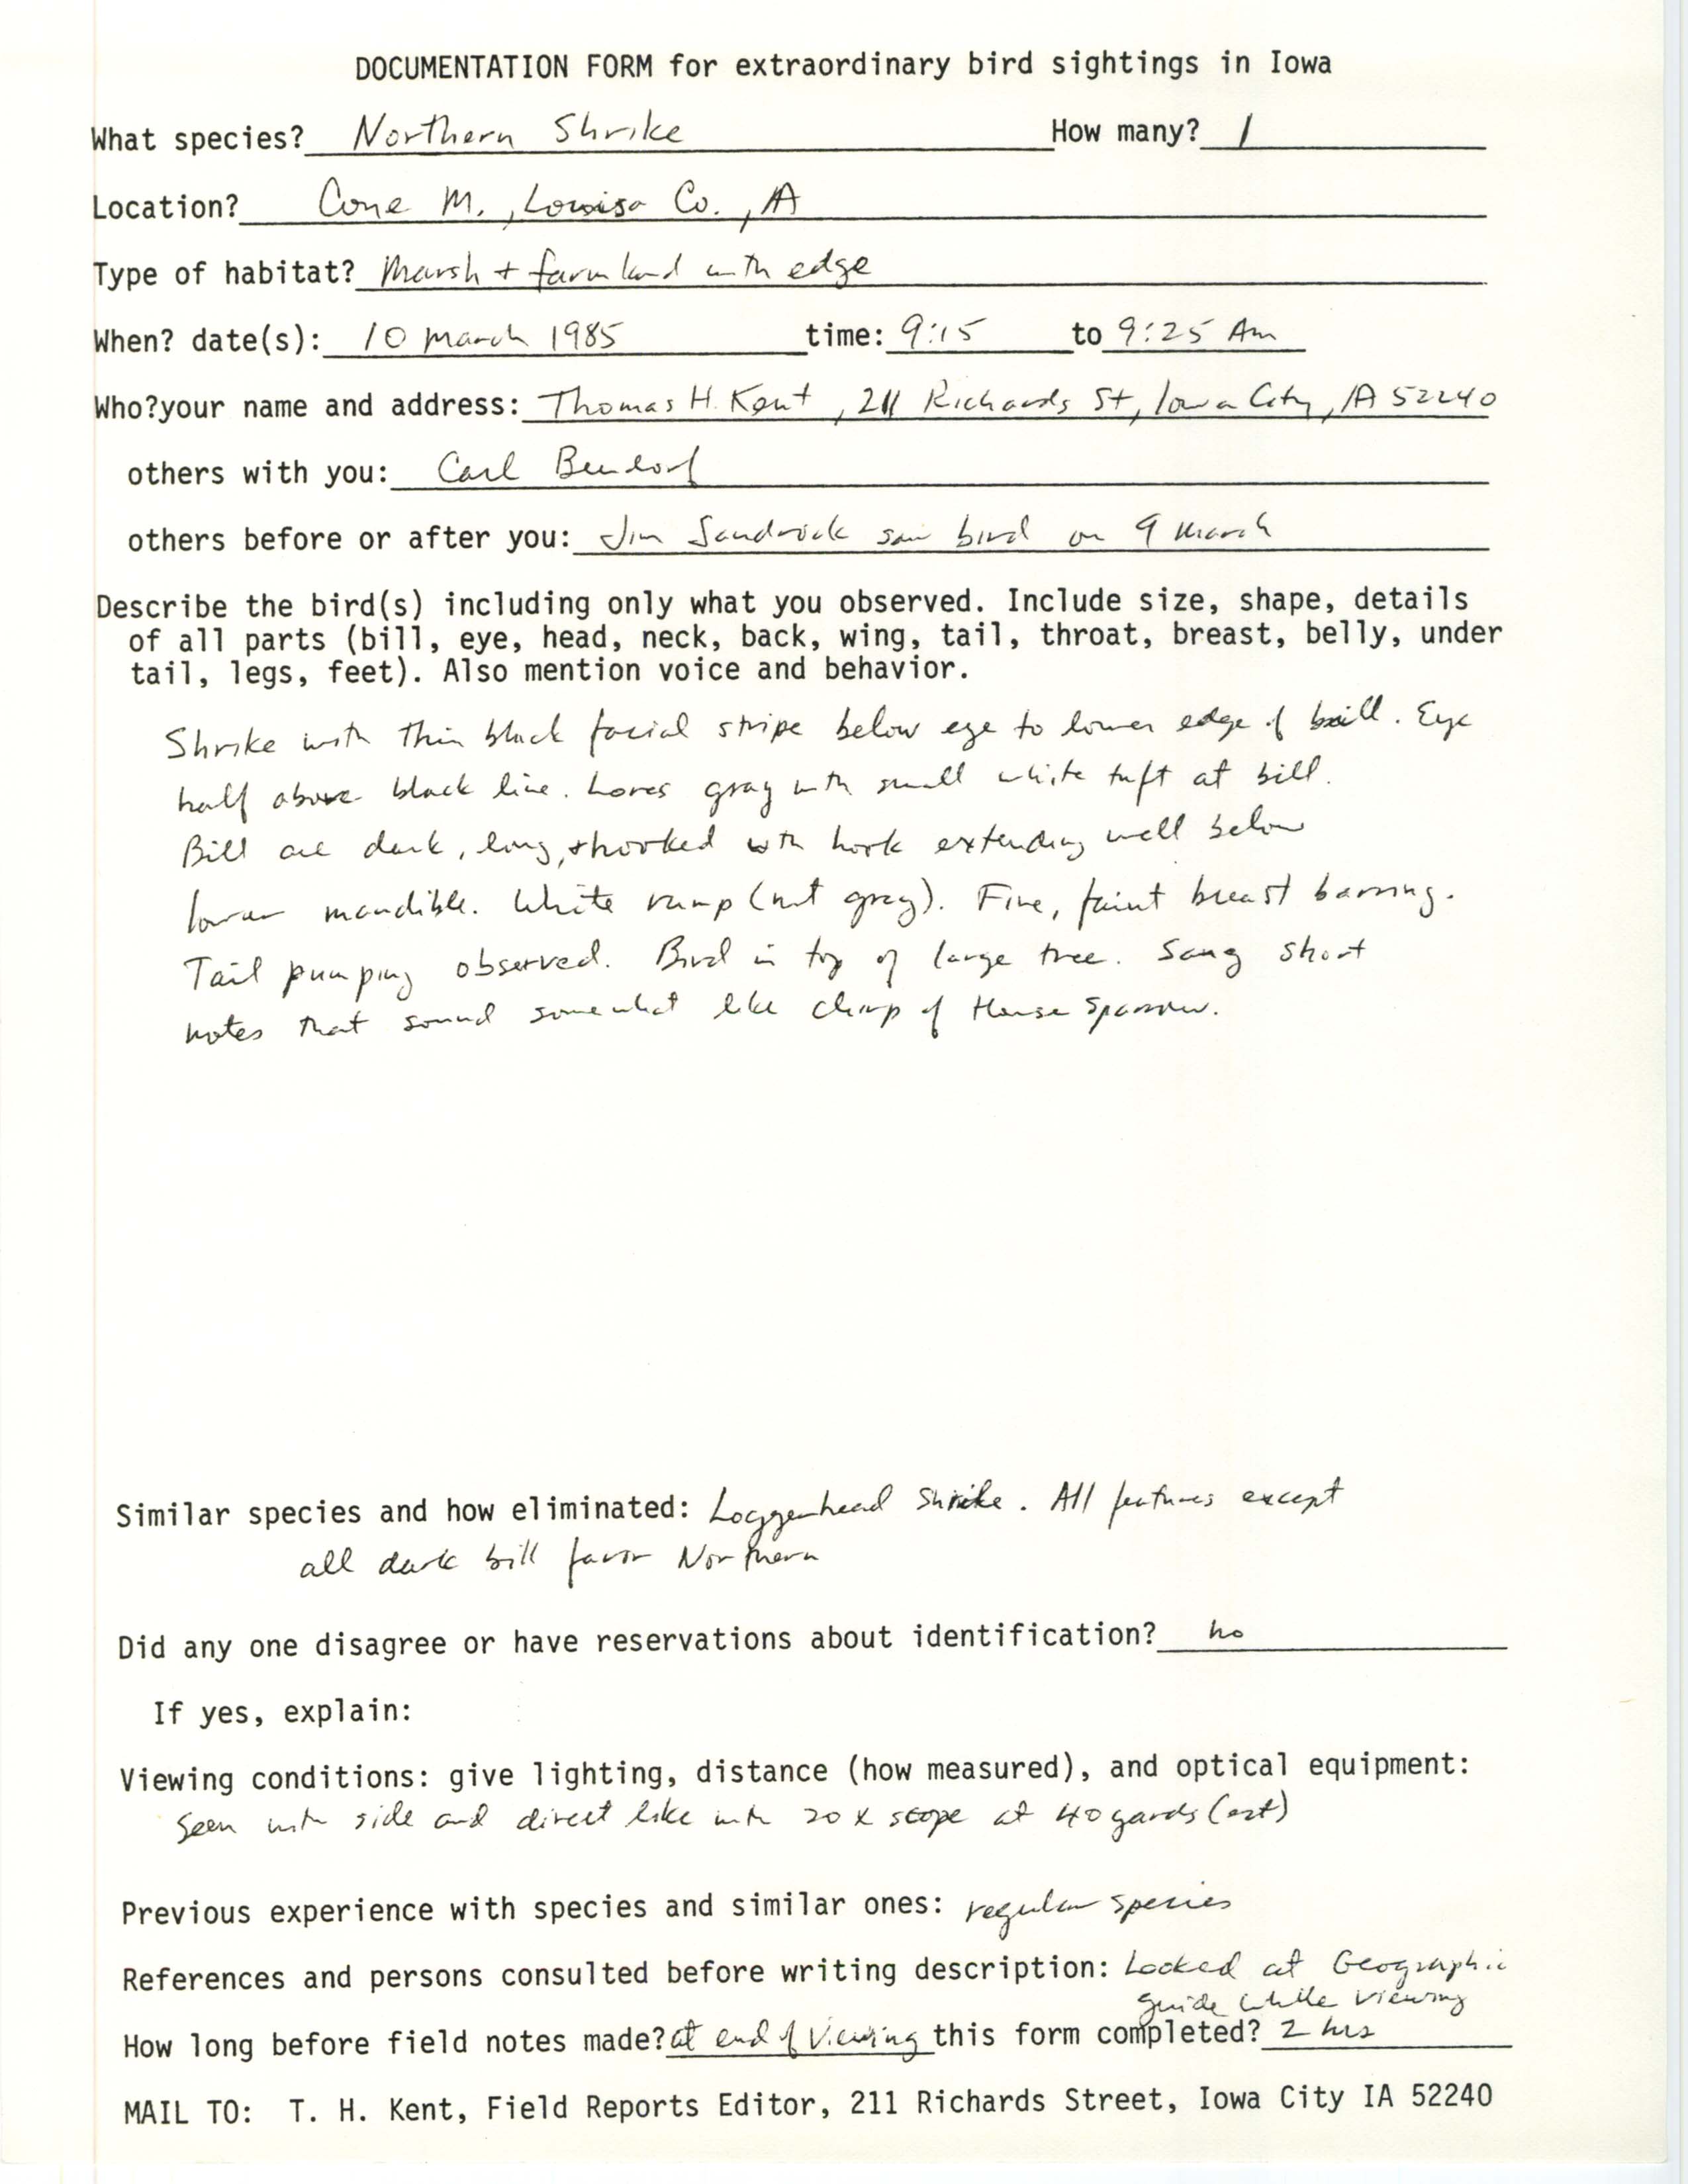 Rare bird documentation form for Northern Shrike at Cone Marsh, 1985